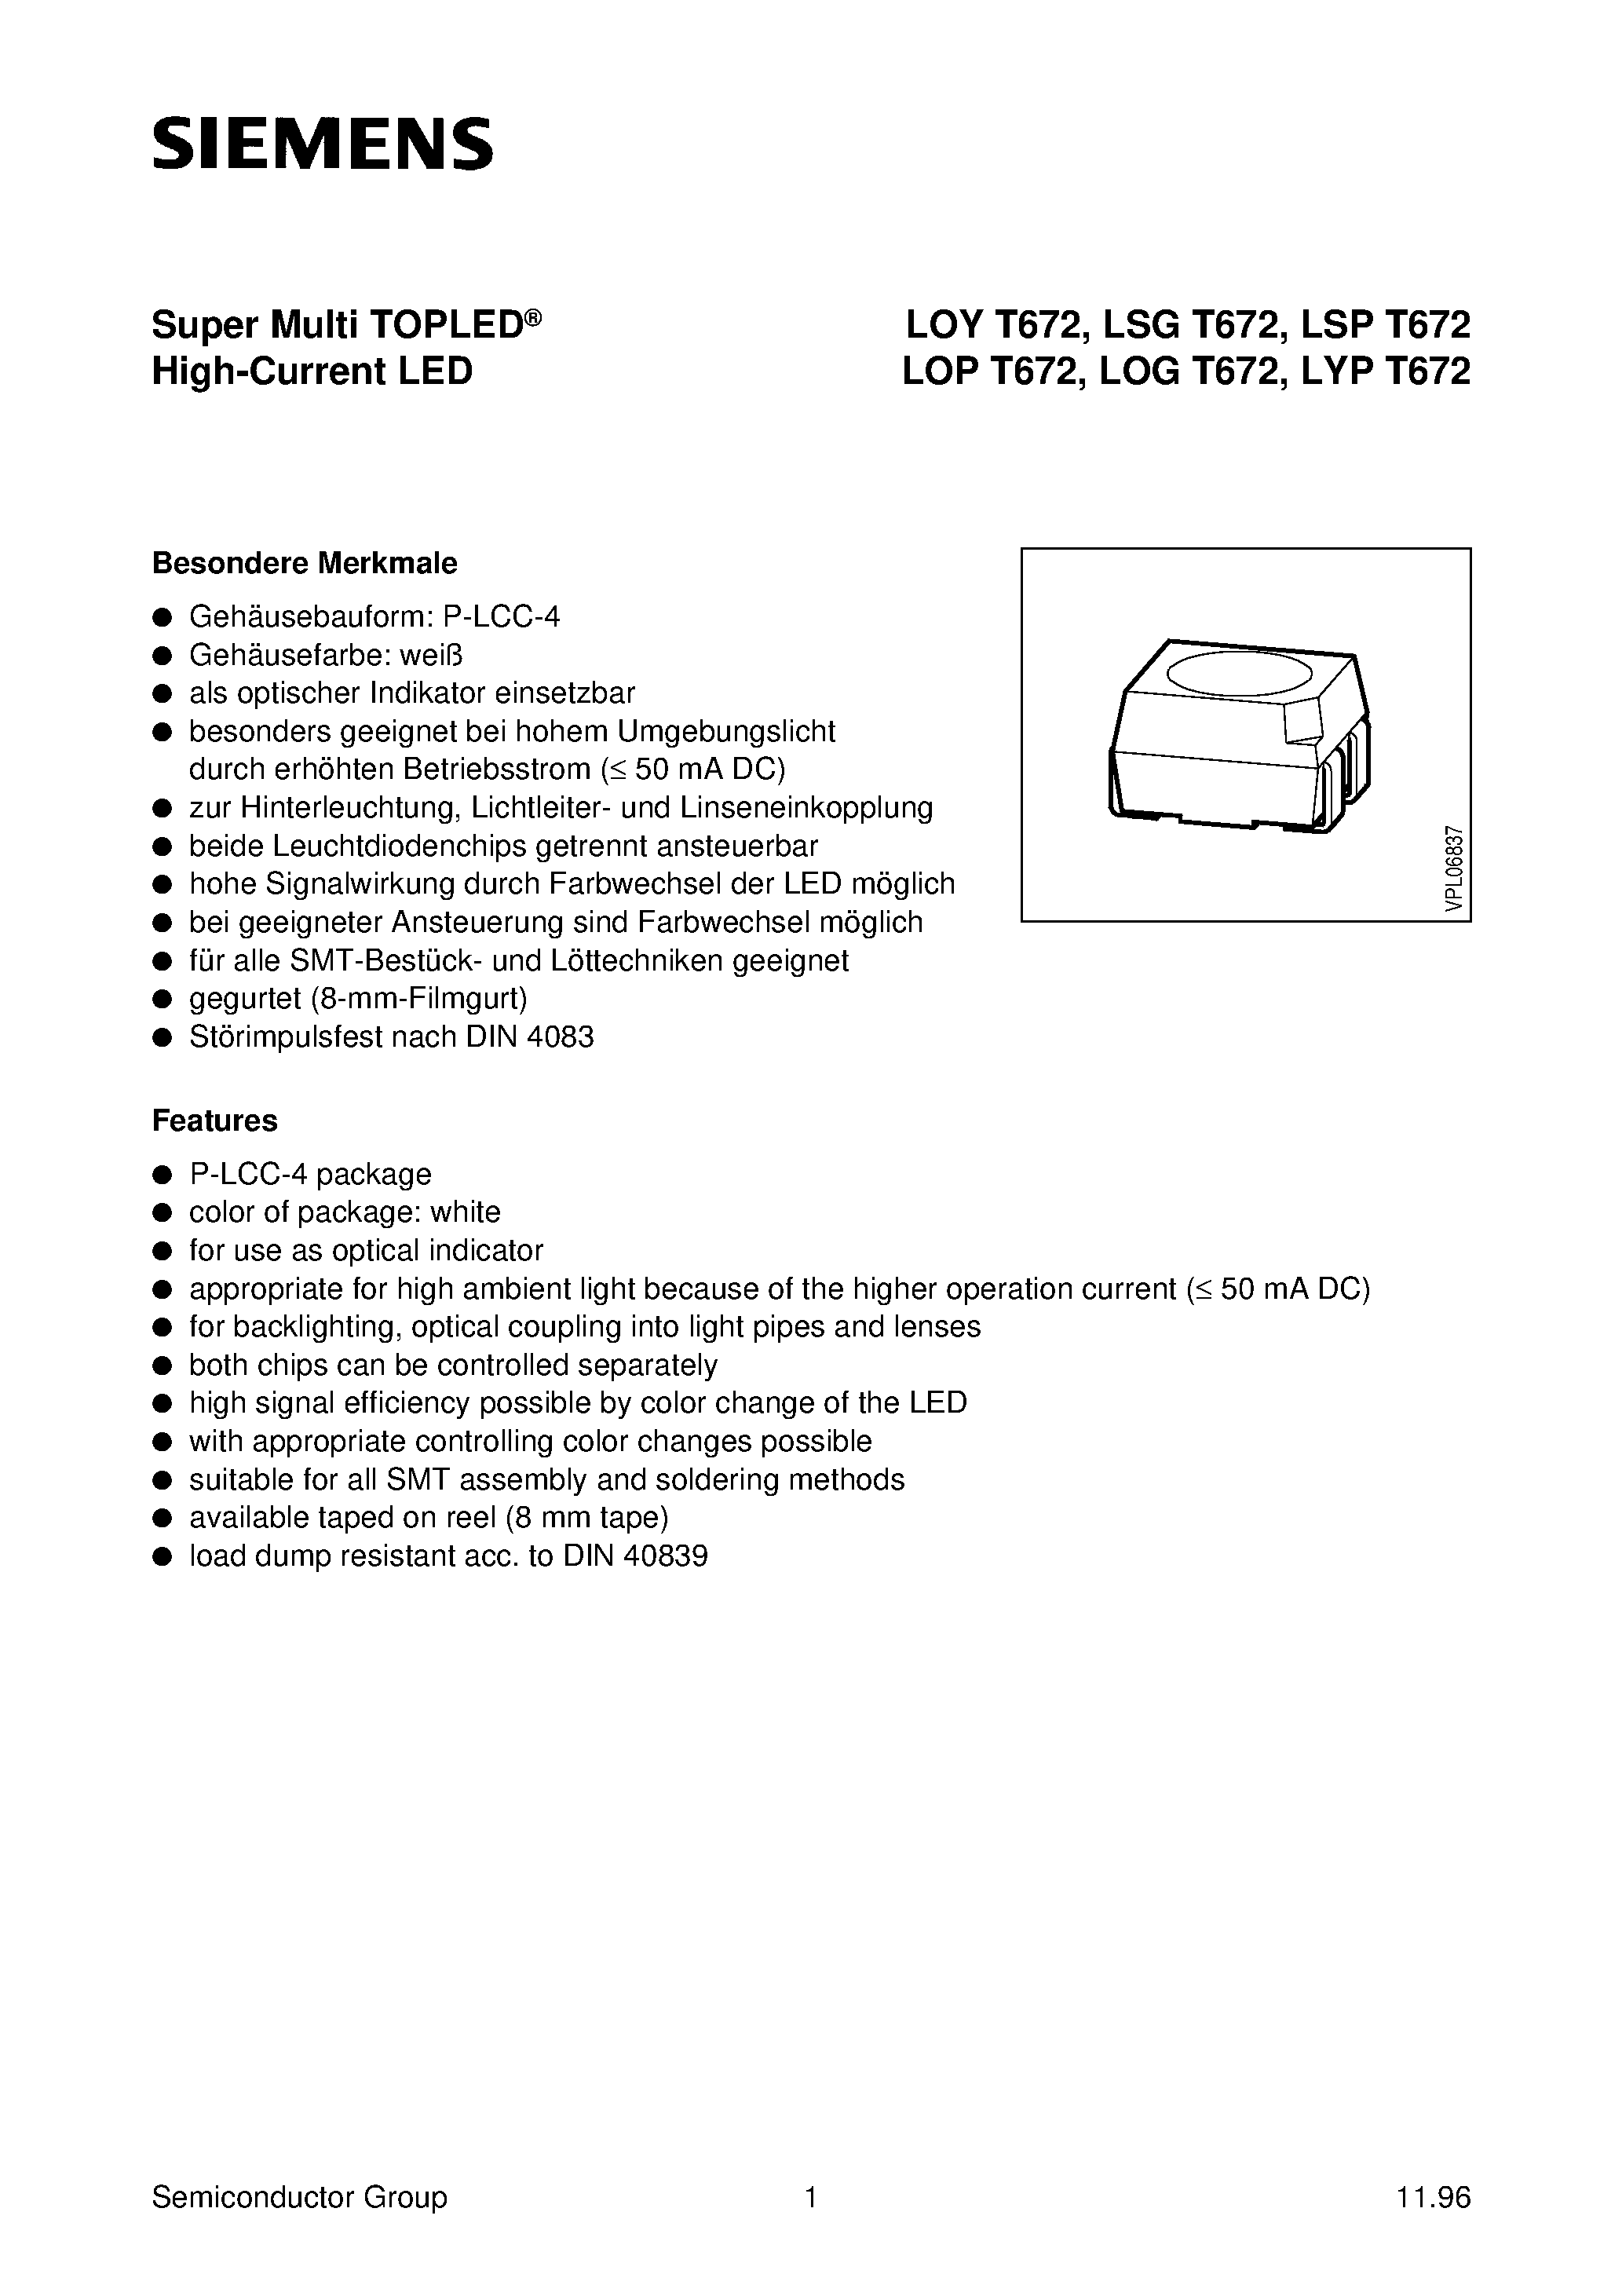 Datasheet LSPT672-N - Super Multi TOPLED High-Current LED page 1